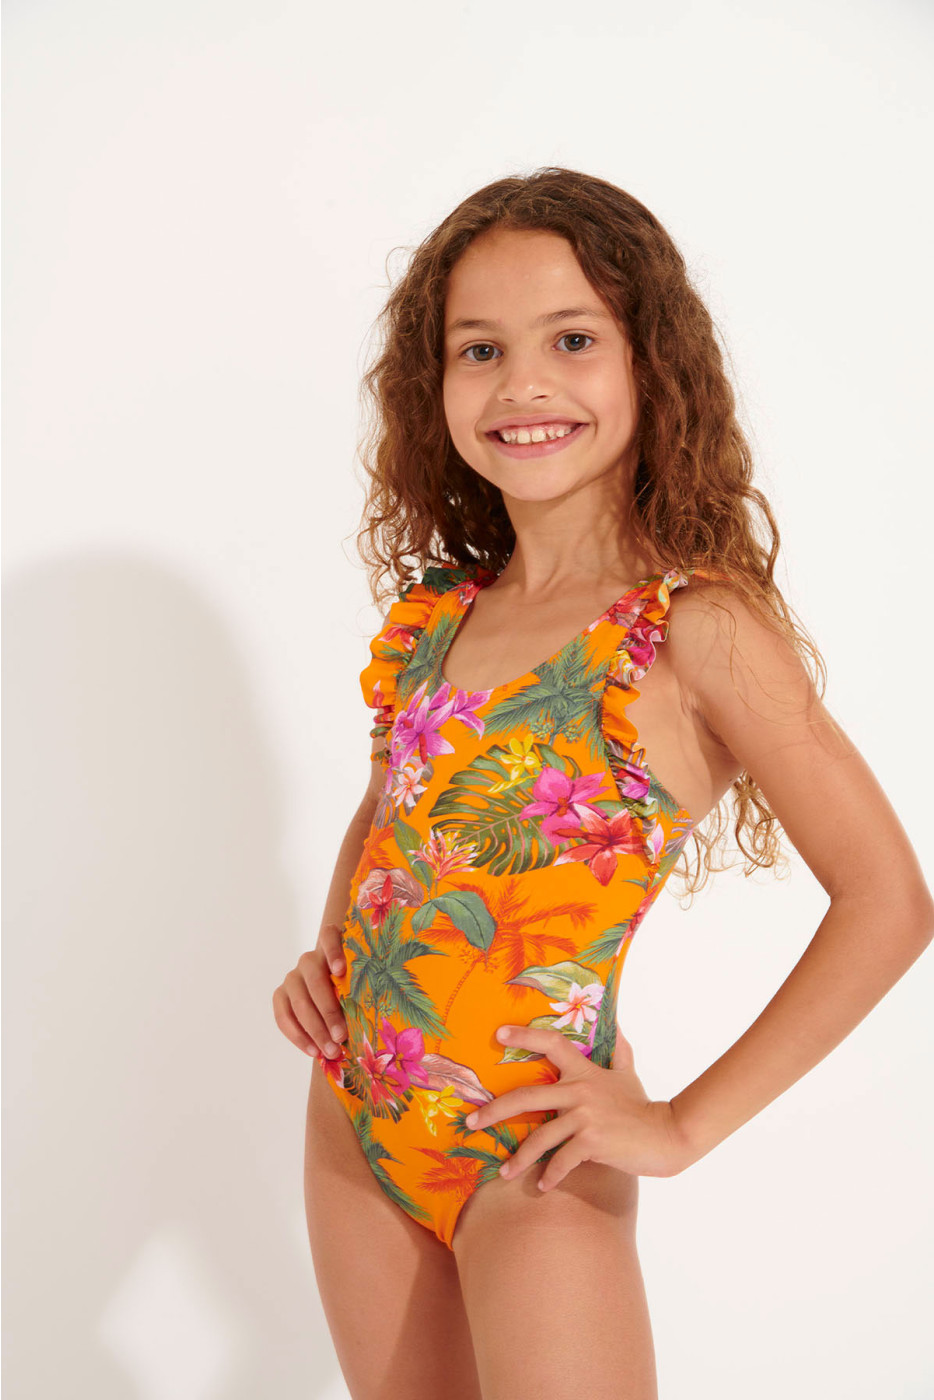 Girls' TUNES FAGAPEA orange tropical print swimsuit